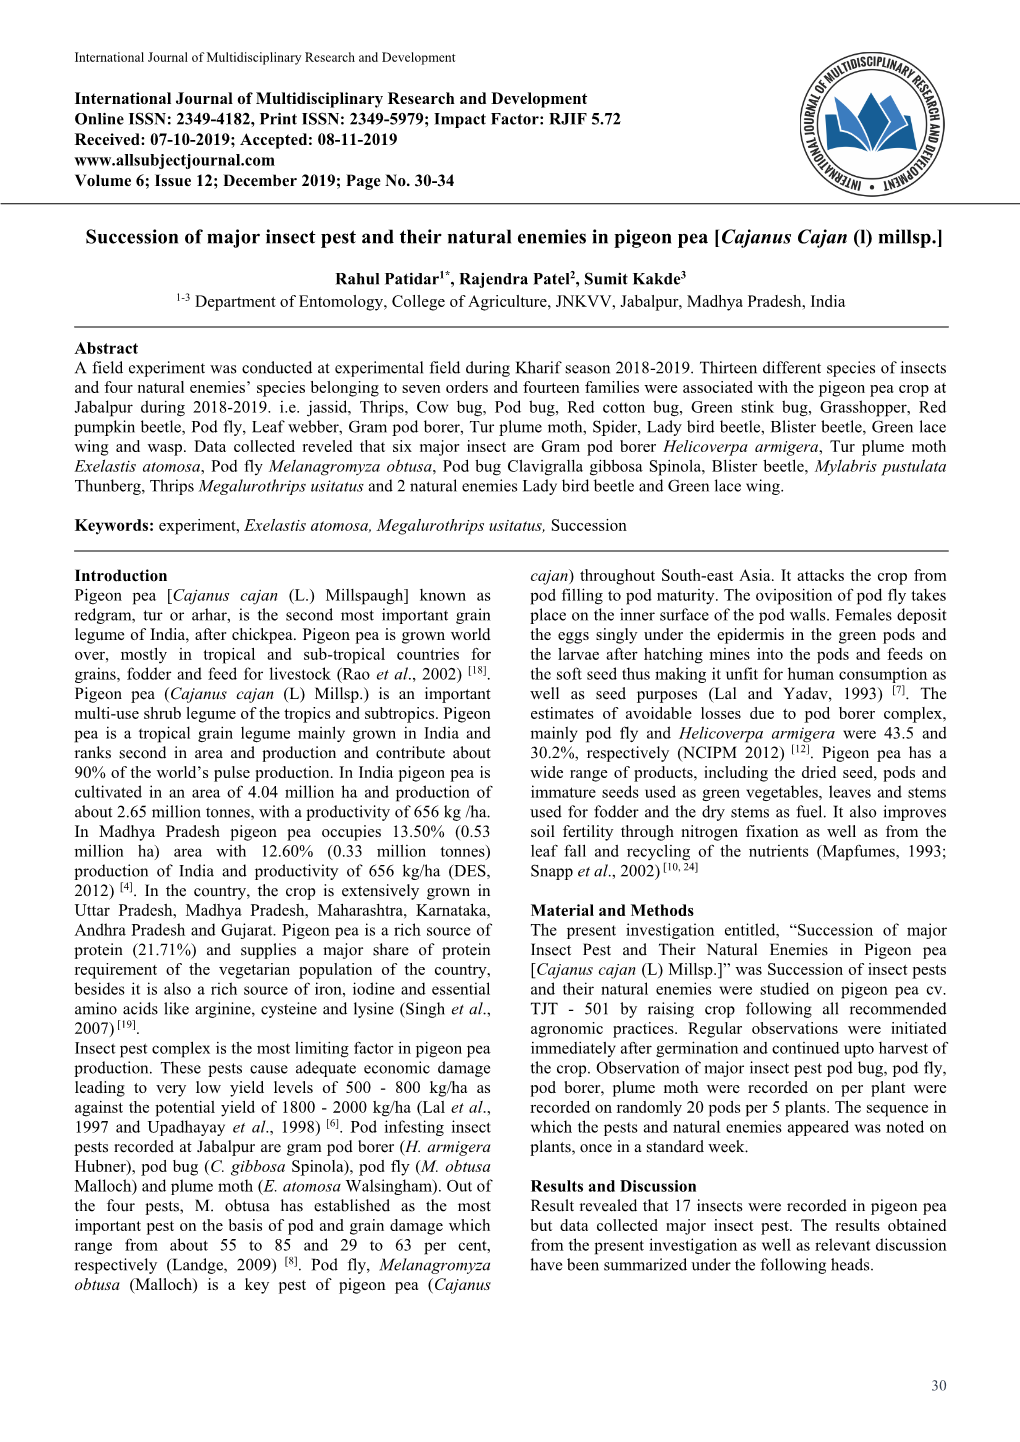 Succession of Major Insect Pest and Their Natural Enemies in Pigeon Pea [Cajanus Cajan (L) Millsp.]